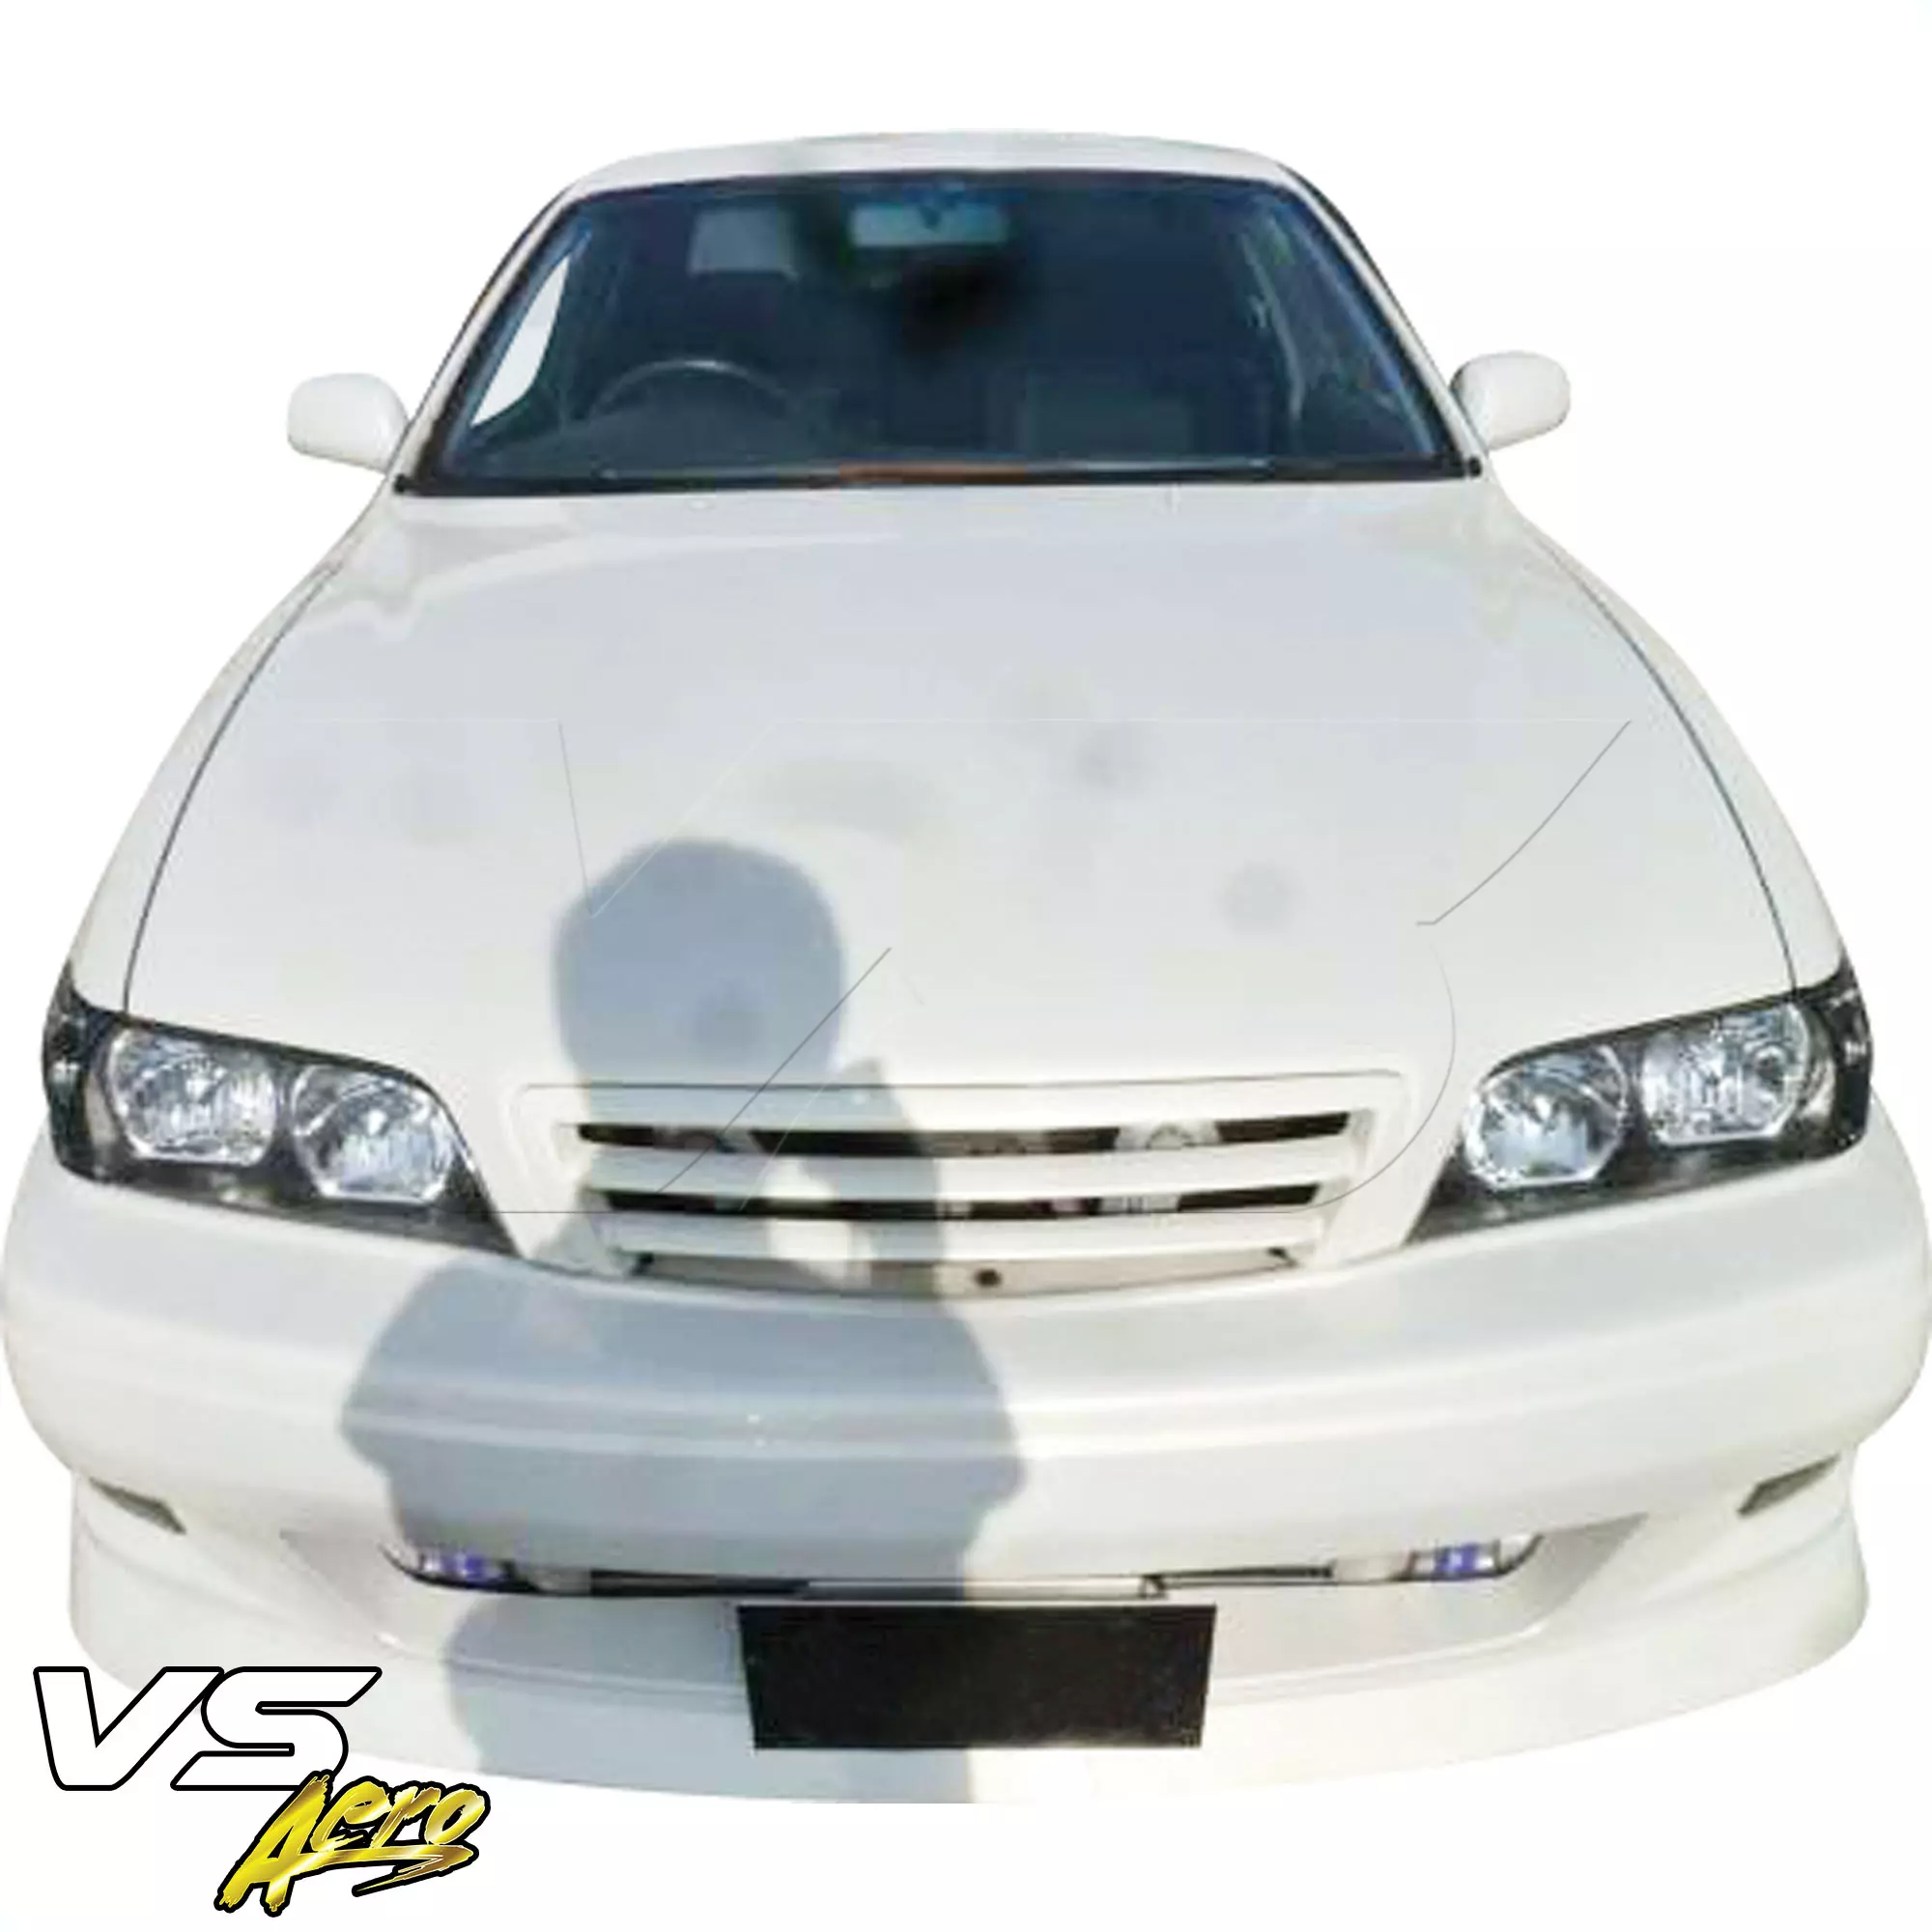 VSaero FRP URA vL Body Kit 4pc > Toyota Chaser JZX100 1996-2000 - Image 10